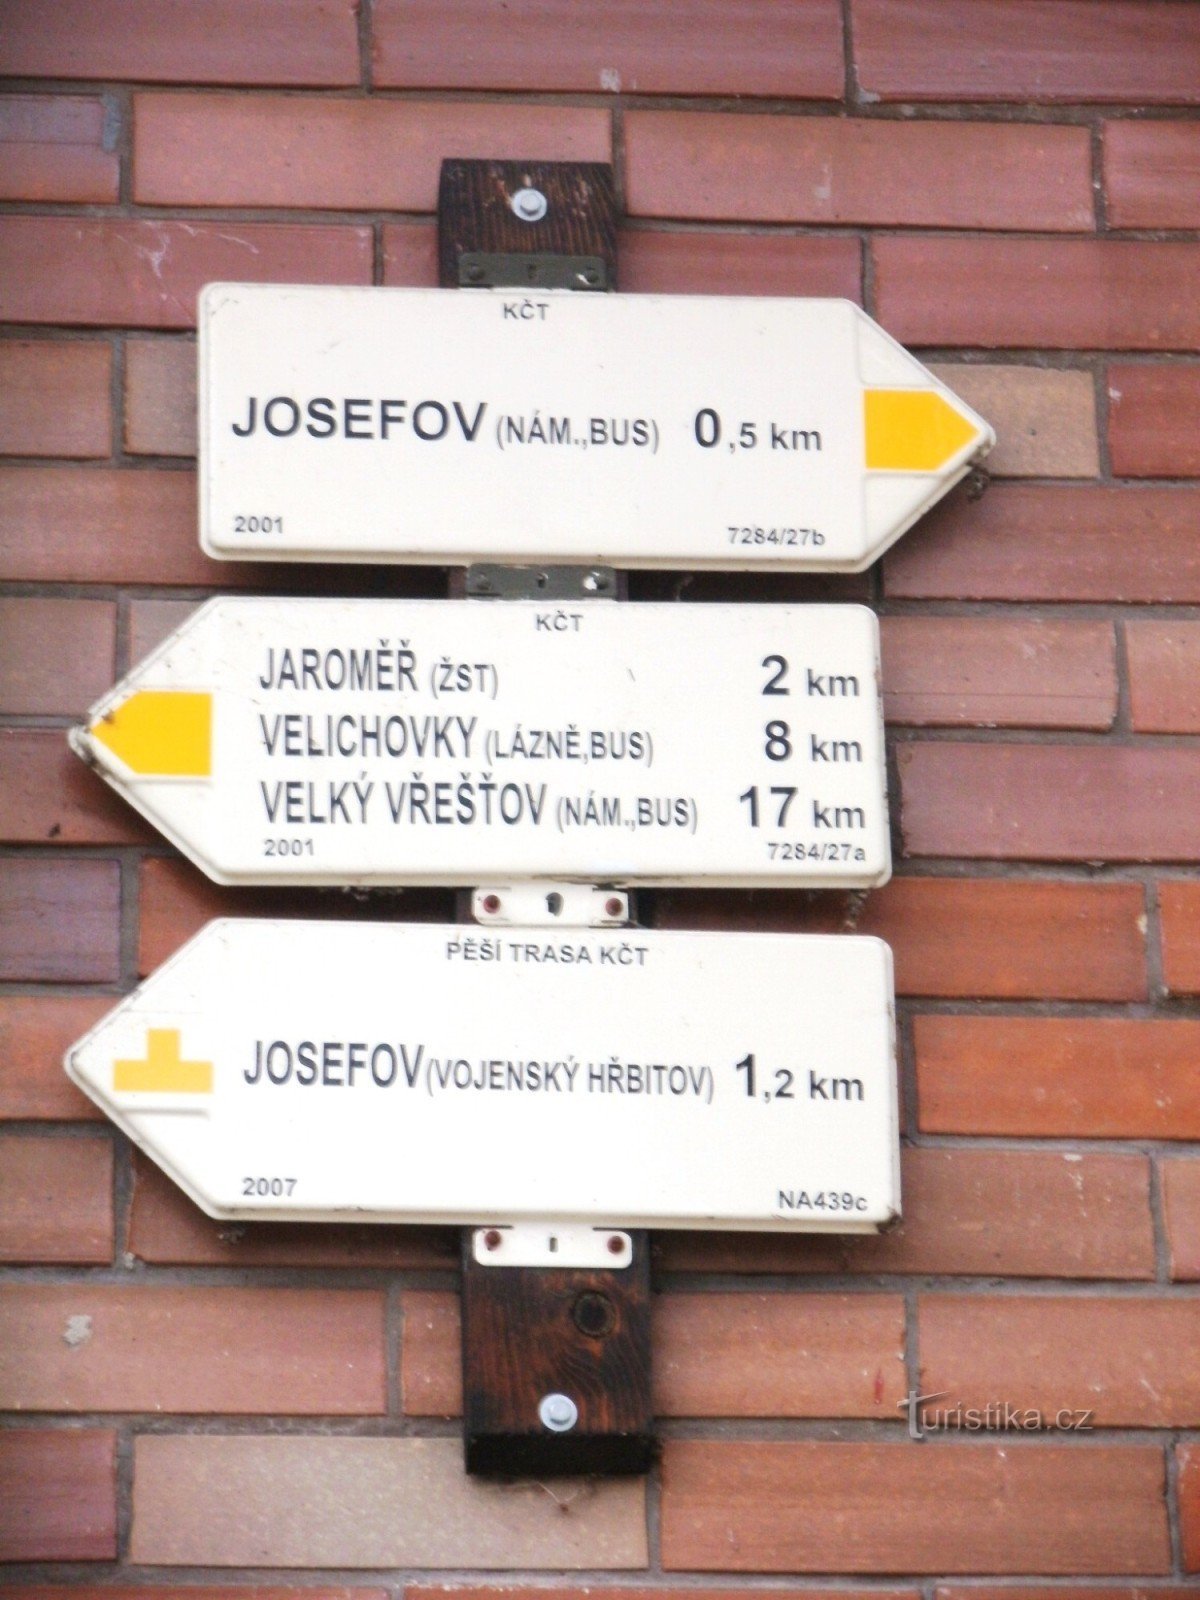 encrucijada turística Josefov - entrada al metro